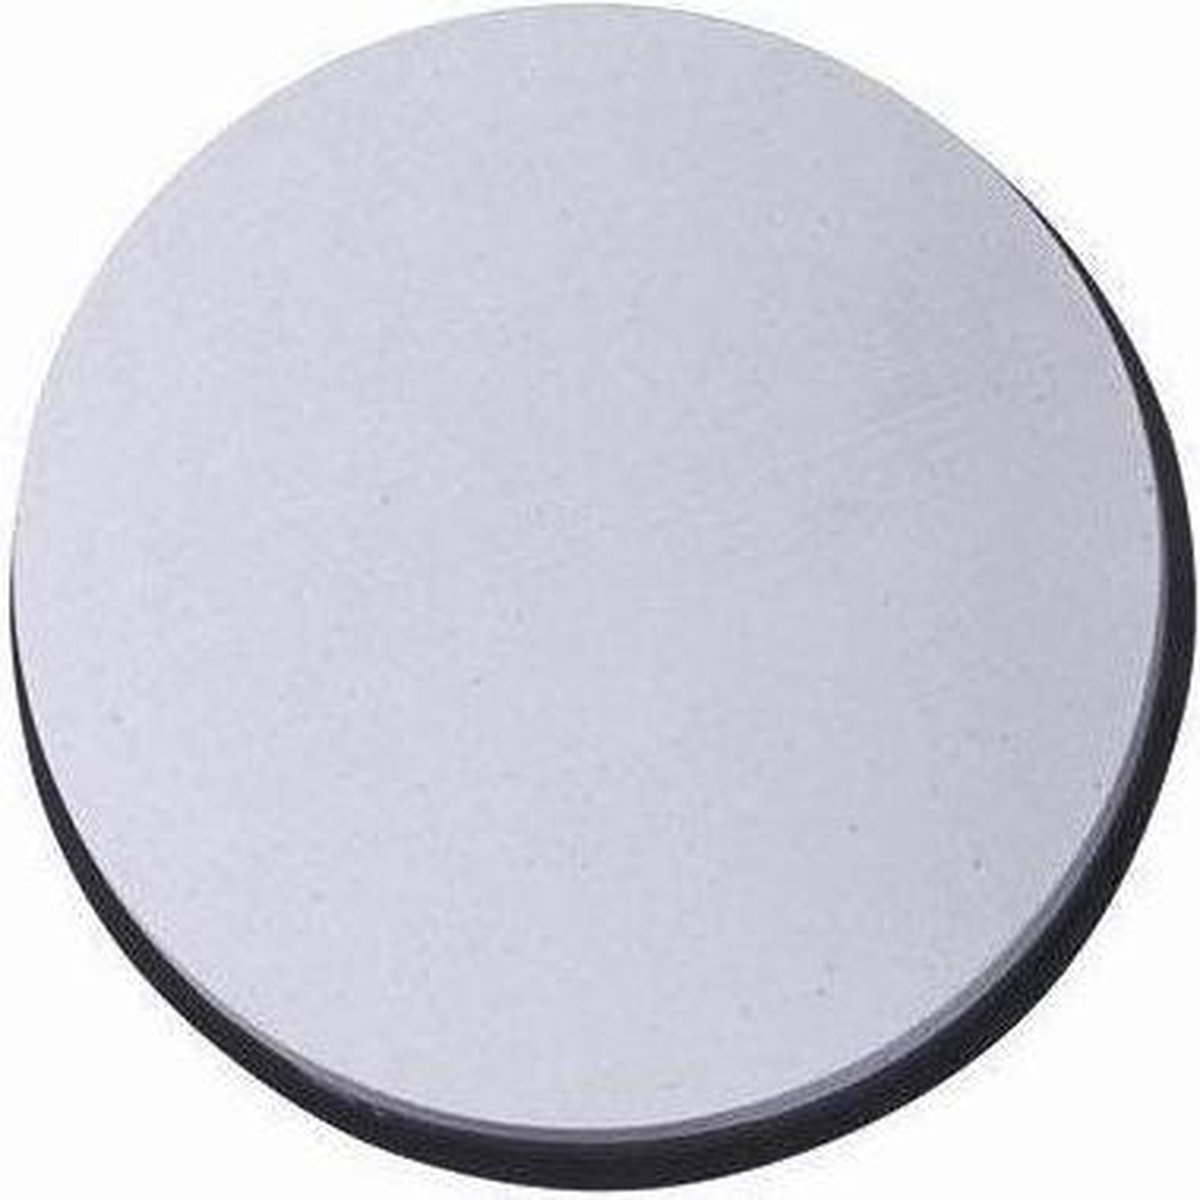 Ubbink Vijververlichting Ceramic disk 20 set van 3 stuks | bol.com